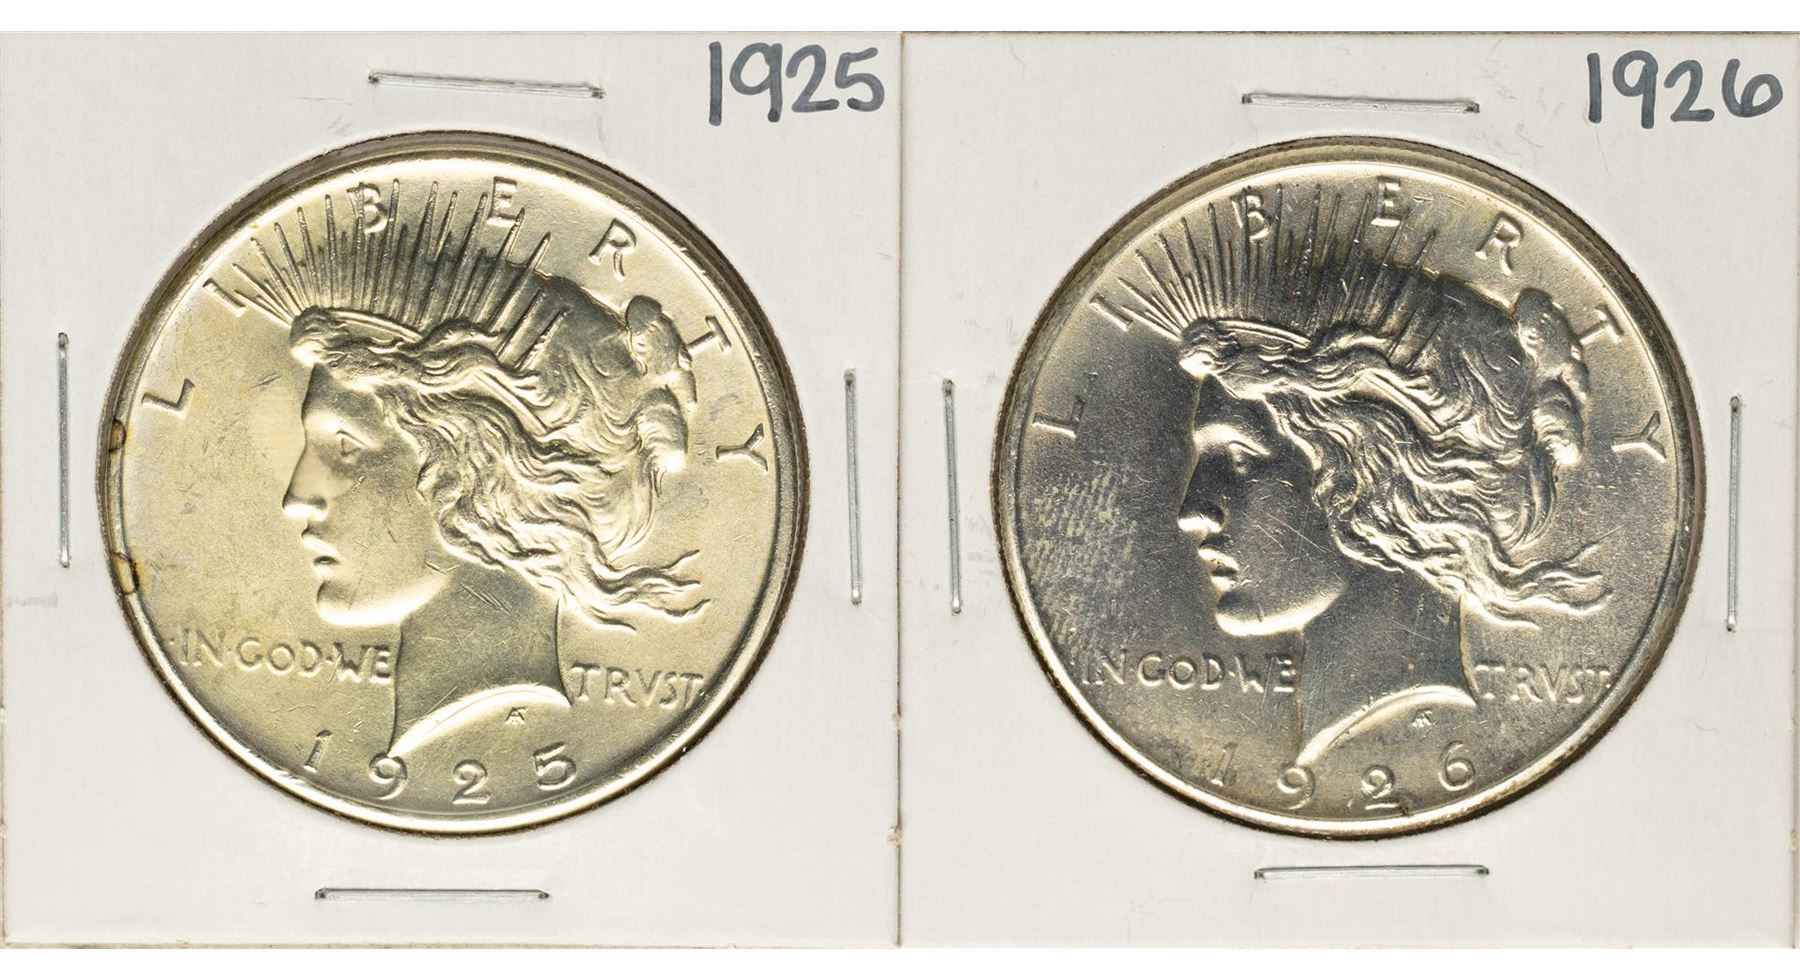 1925 silver dollar